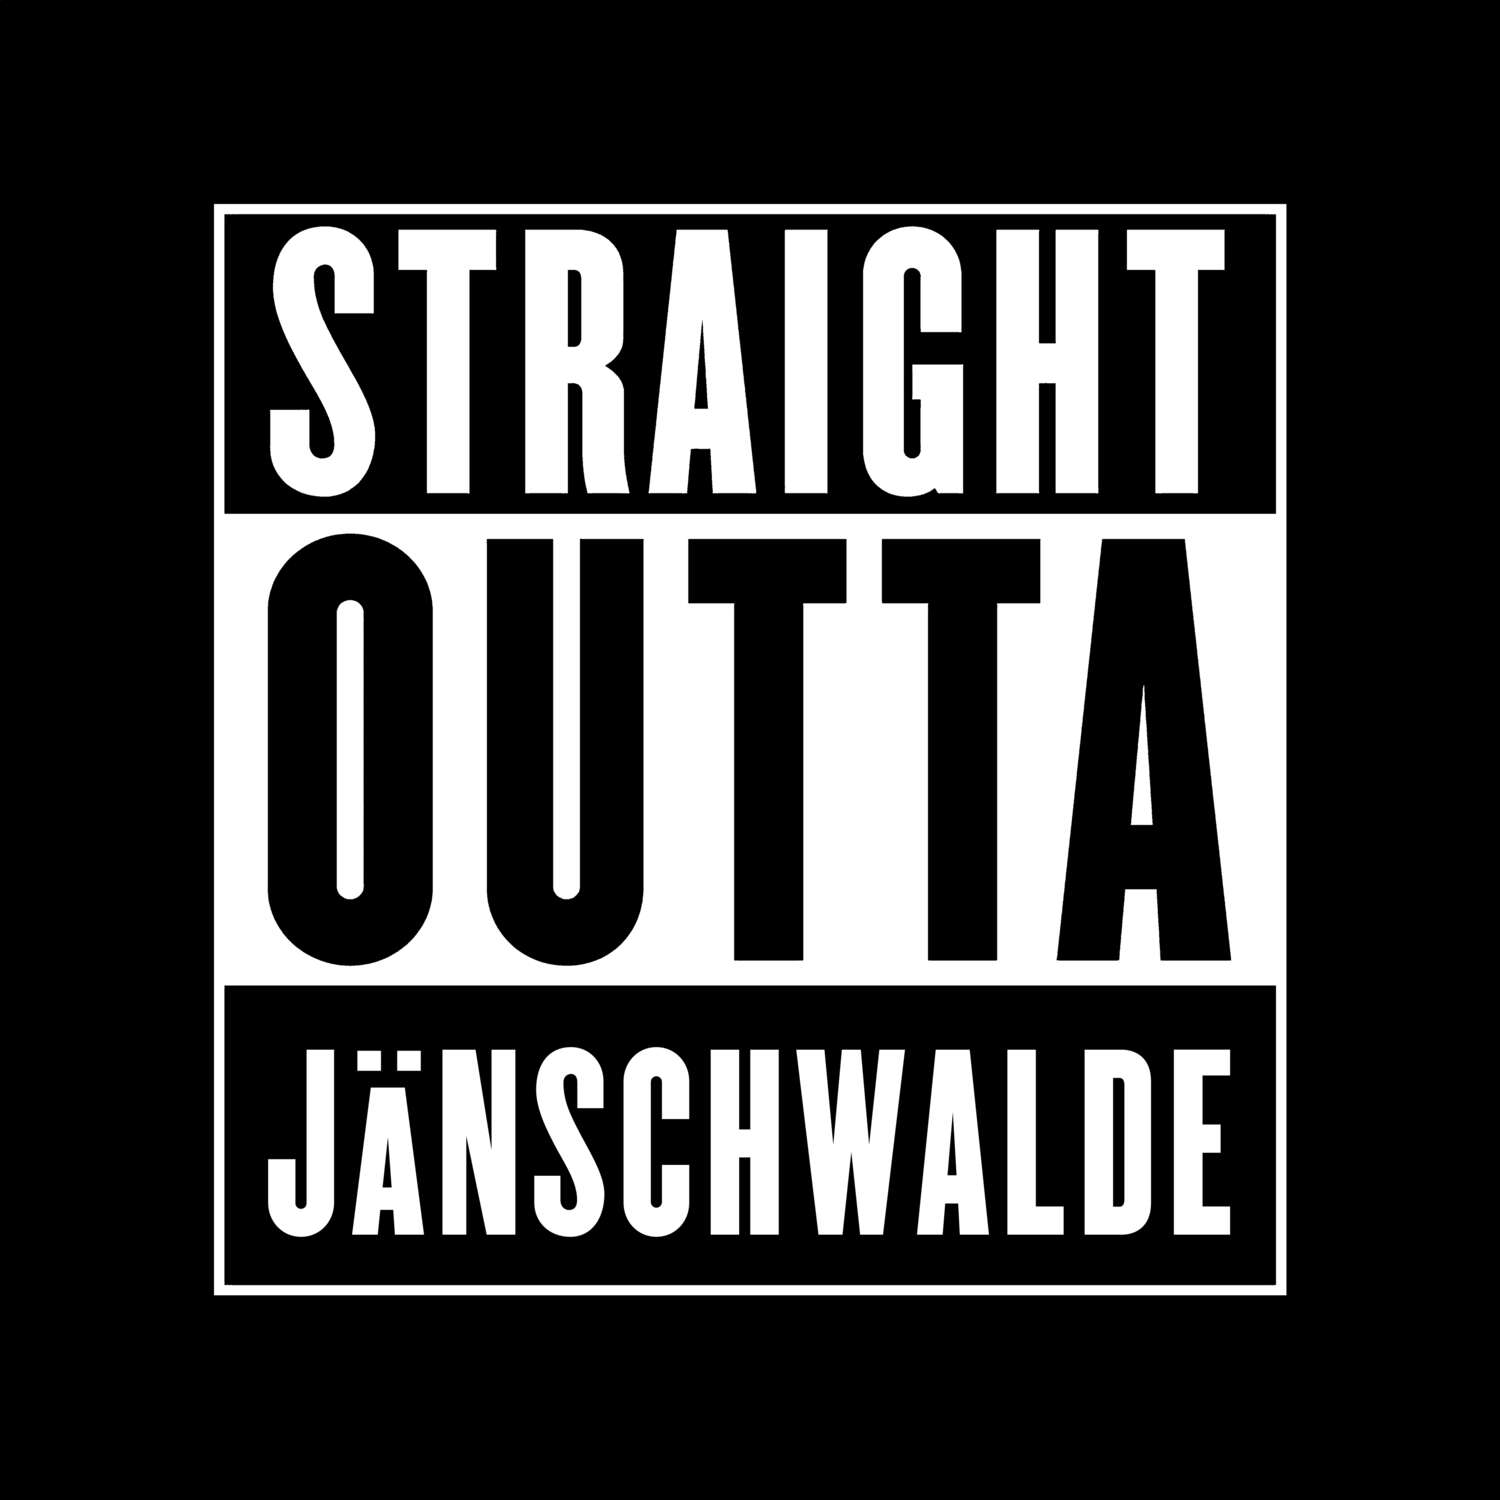 Jänschwalde T-Shirt »Straight Outta«